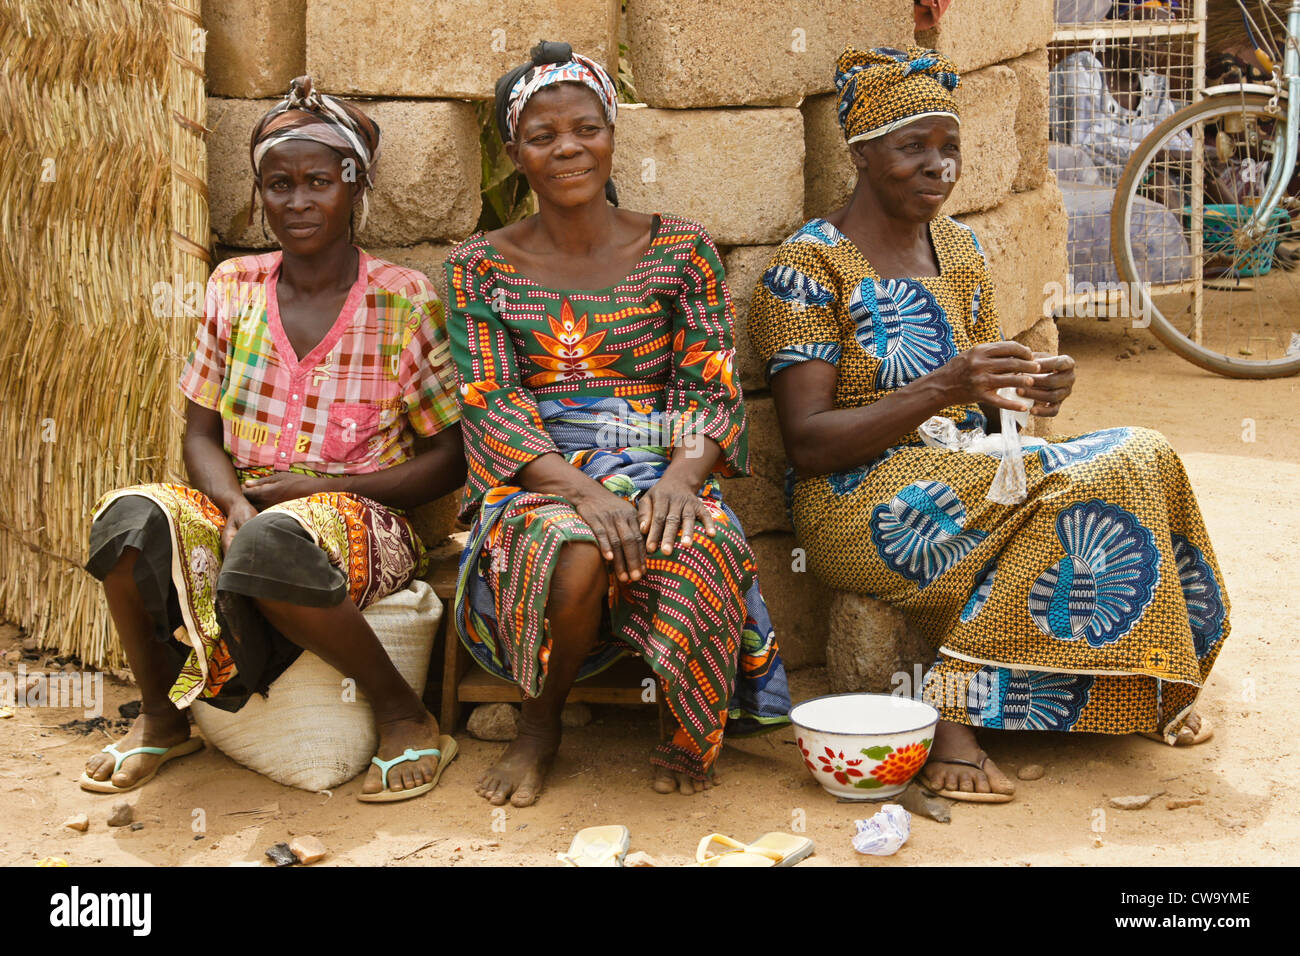 Women in traditional dress sitting in market, Sirigu, Ghana Stock Photo